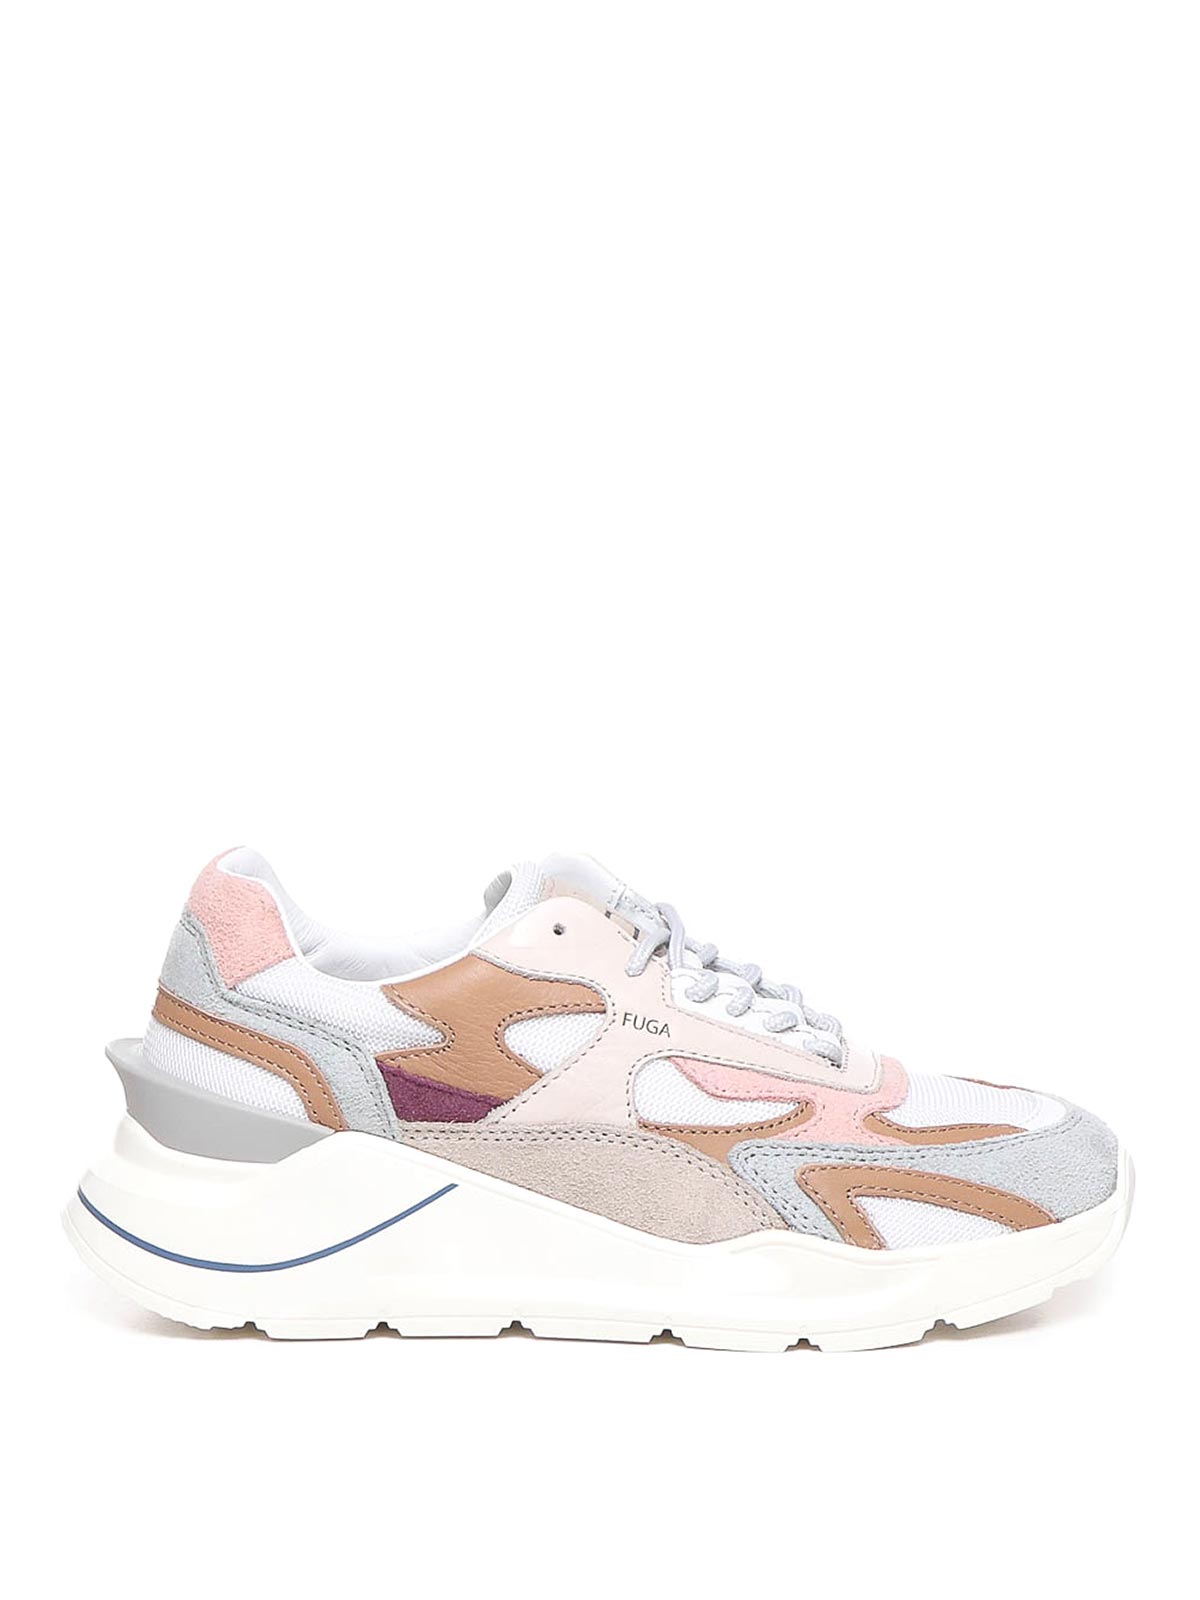 Shop Date Cream Fuga Sneakers In White